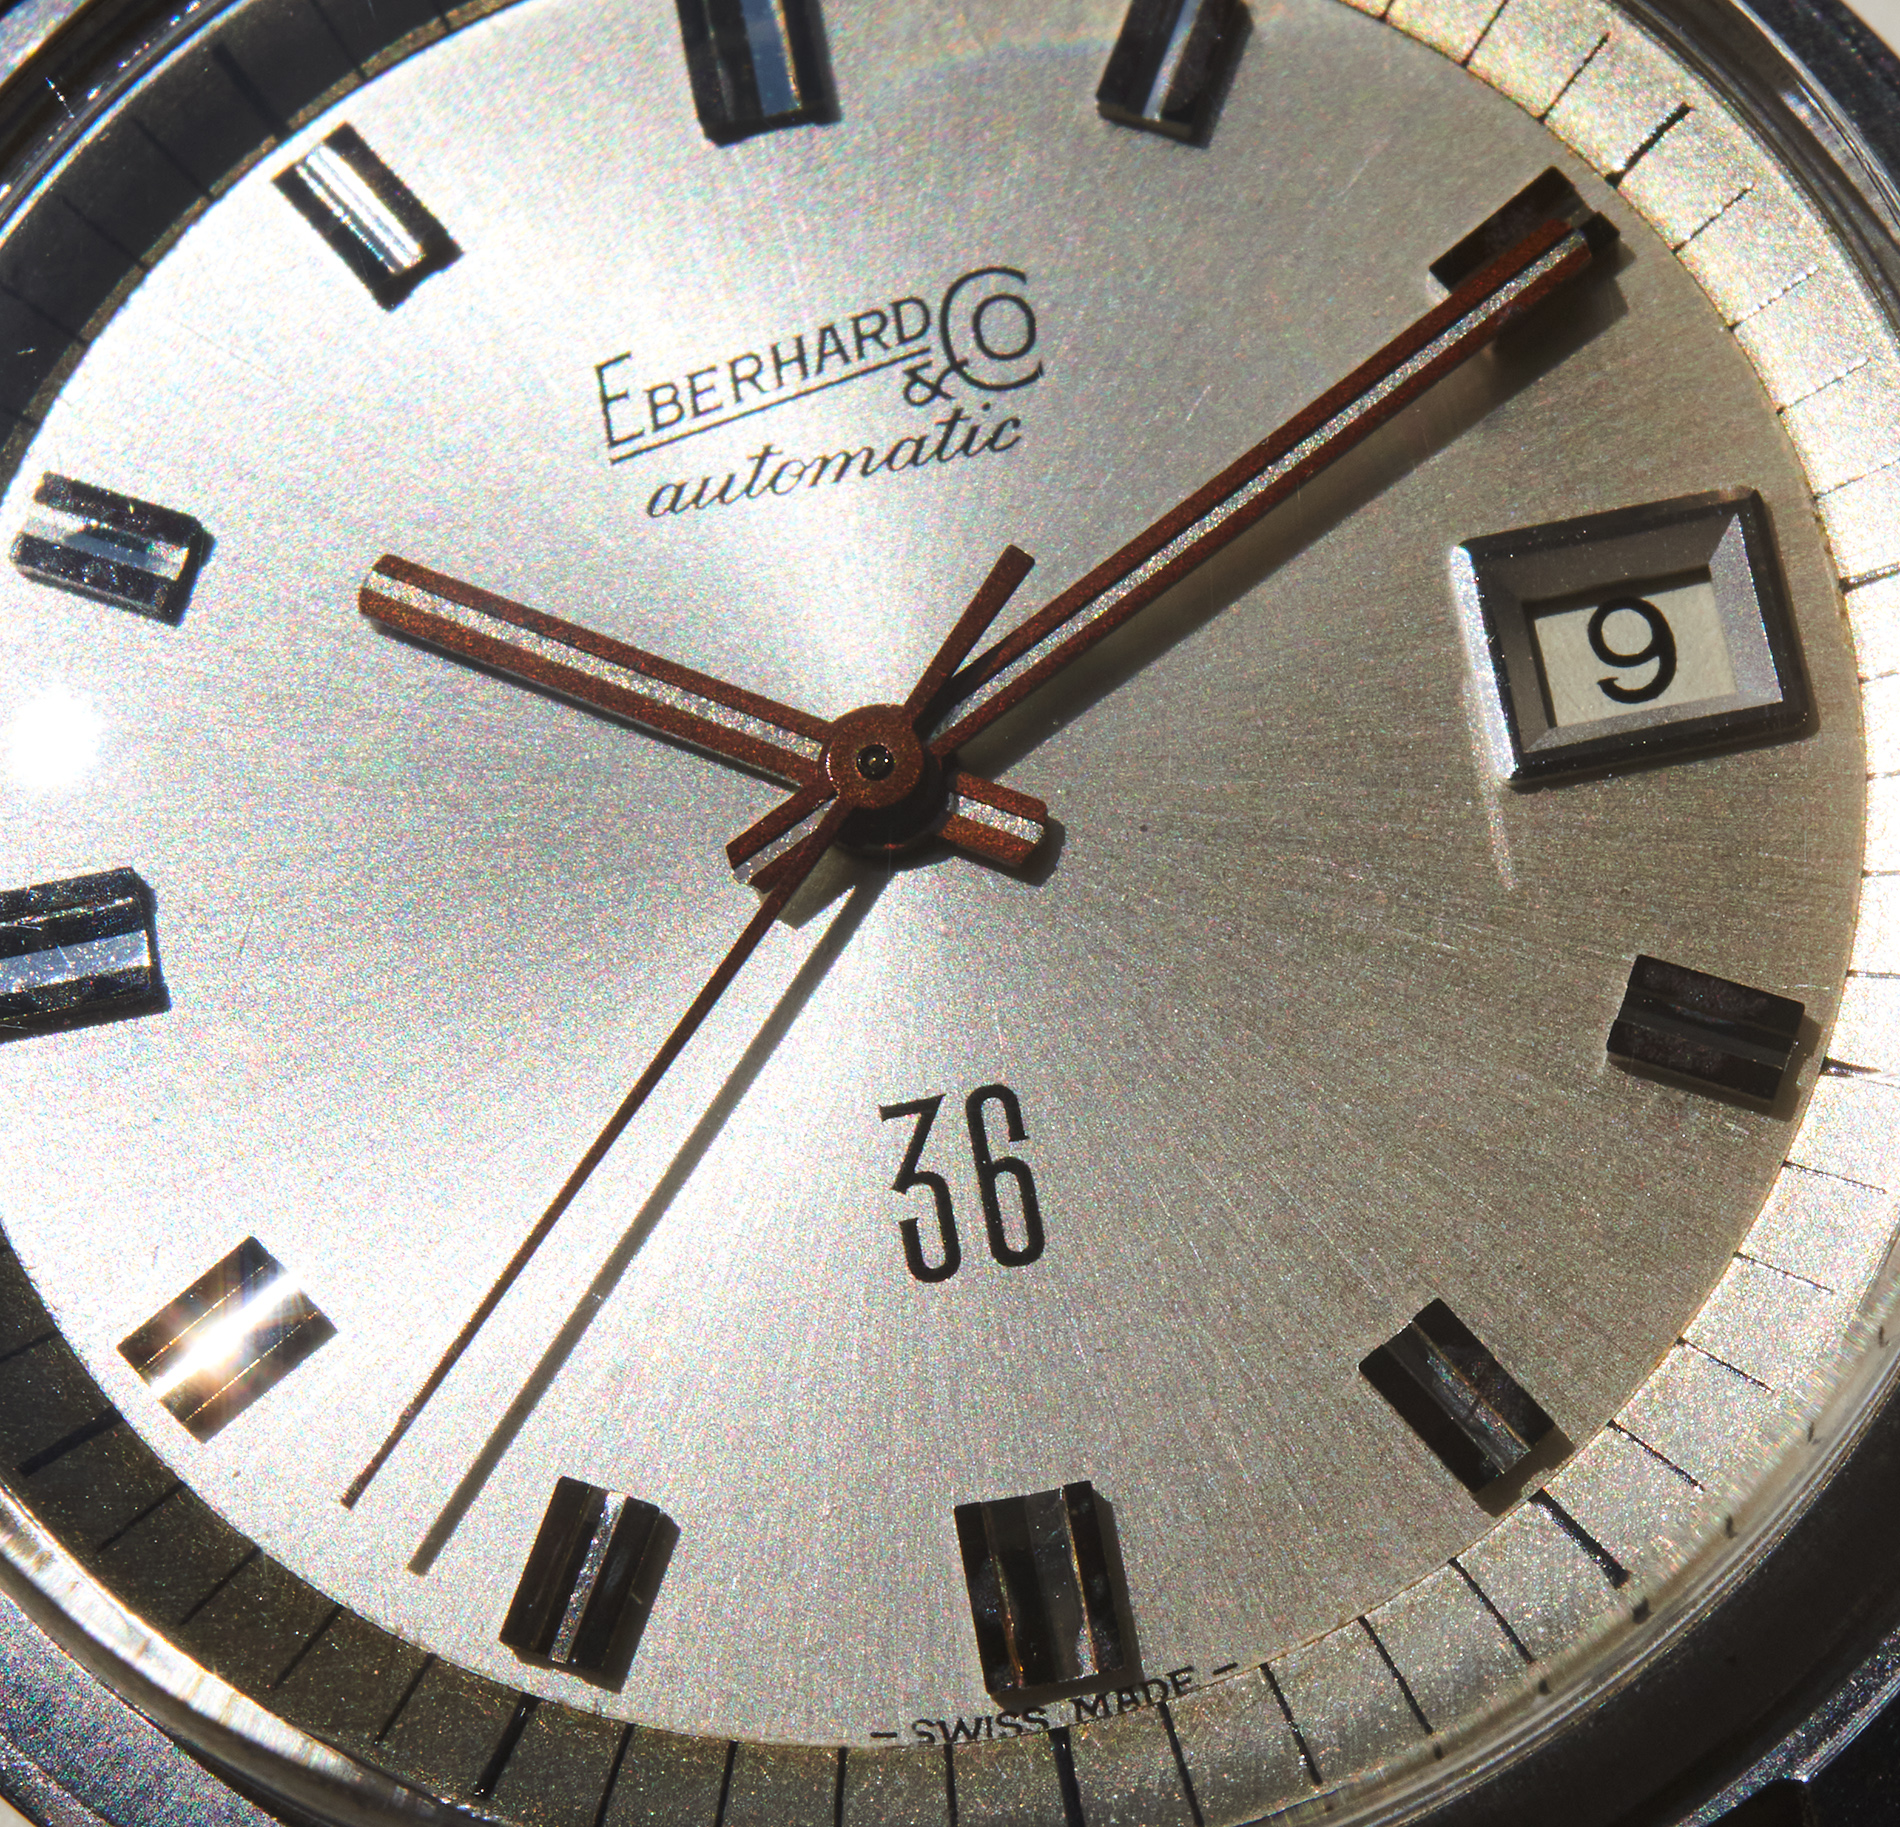 Eberhard & Co Automatic "36"